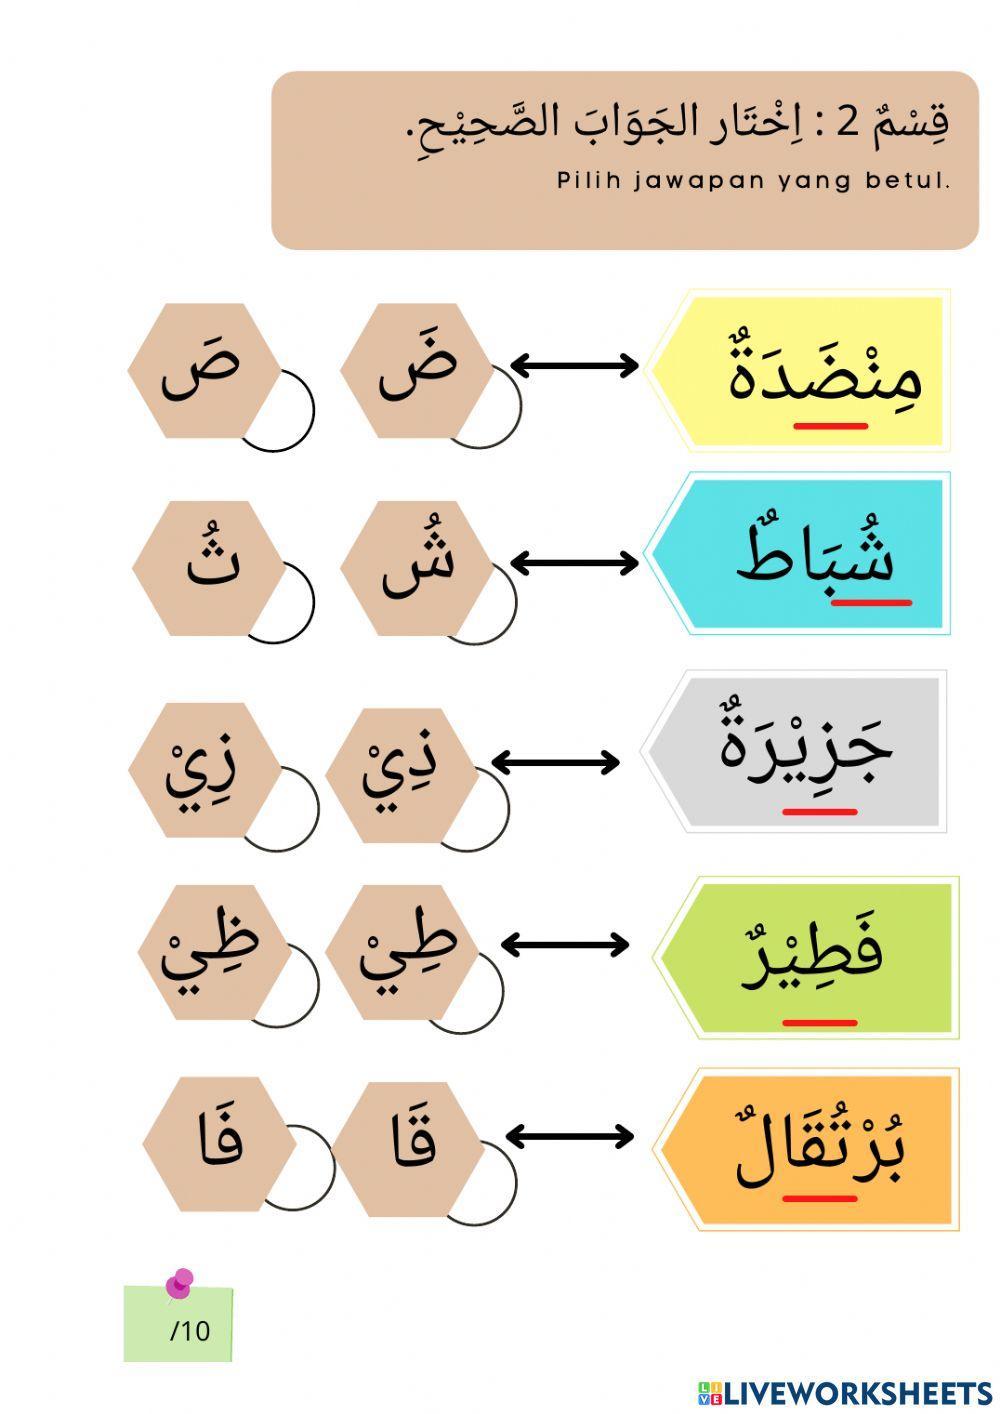 Pentaksiran sumatif bahasa arab tahun 1